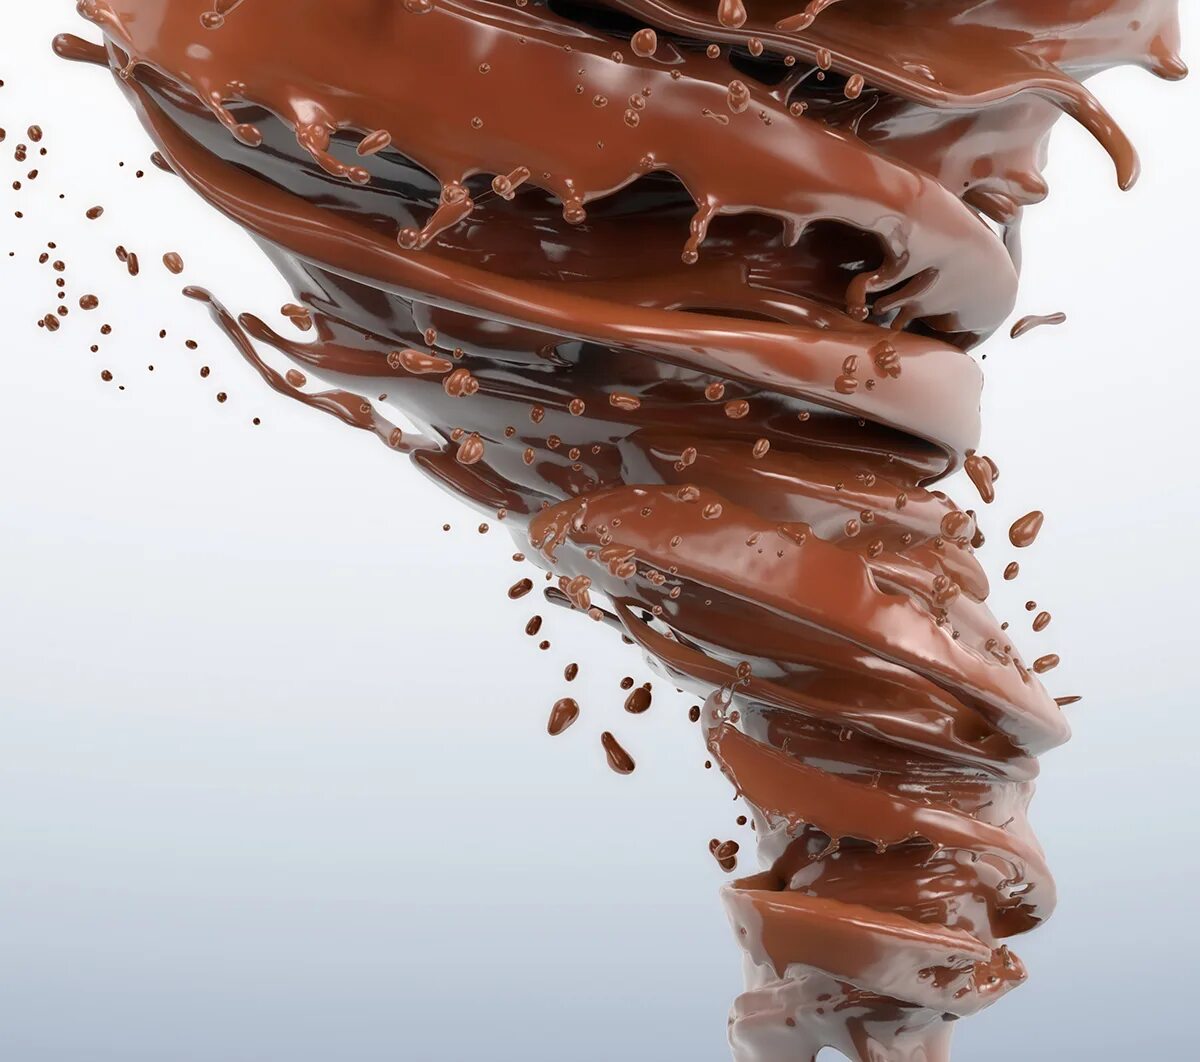 Растаявший шоколад. Брызги шоколада. Жидкий шоколад. Шоколад льется. Шоколадные потеки.